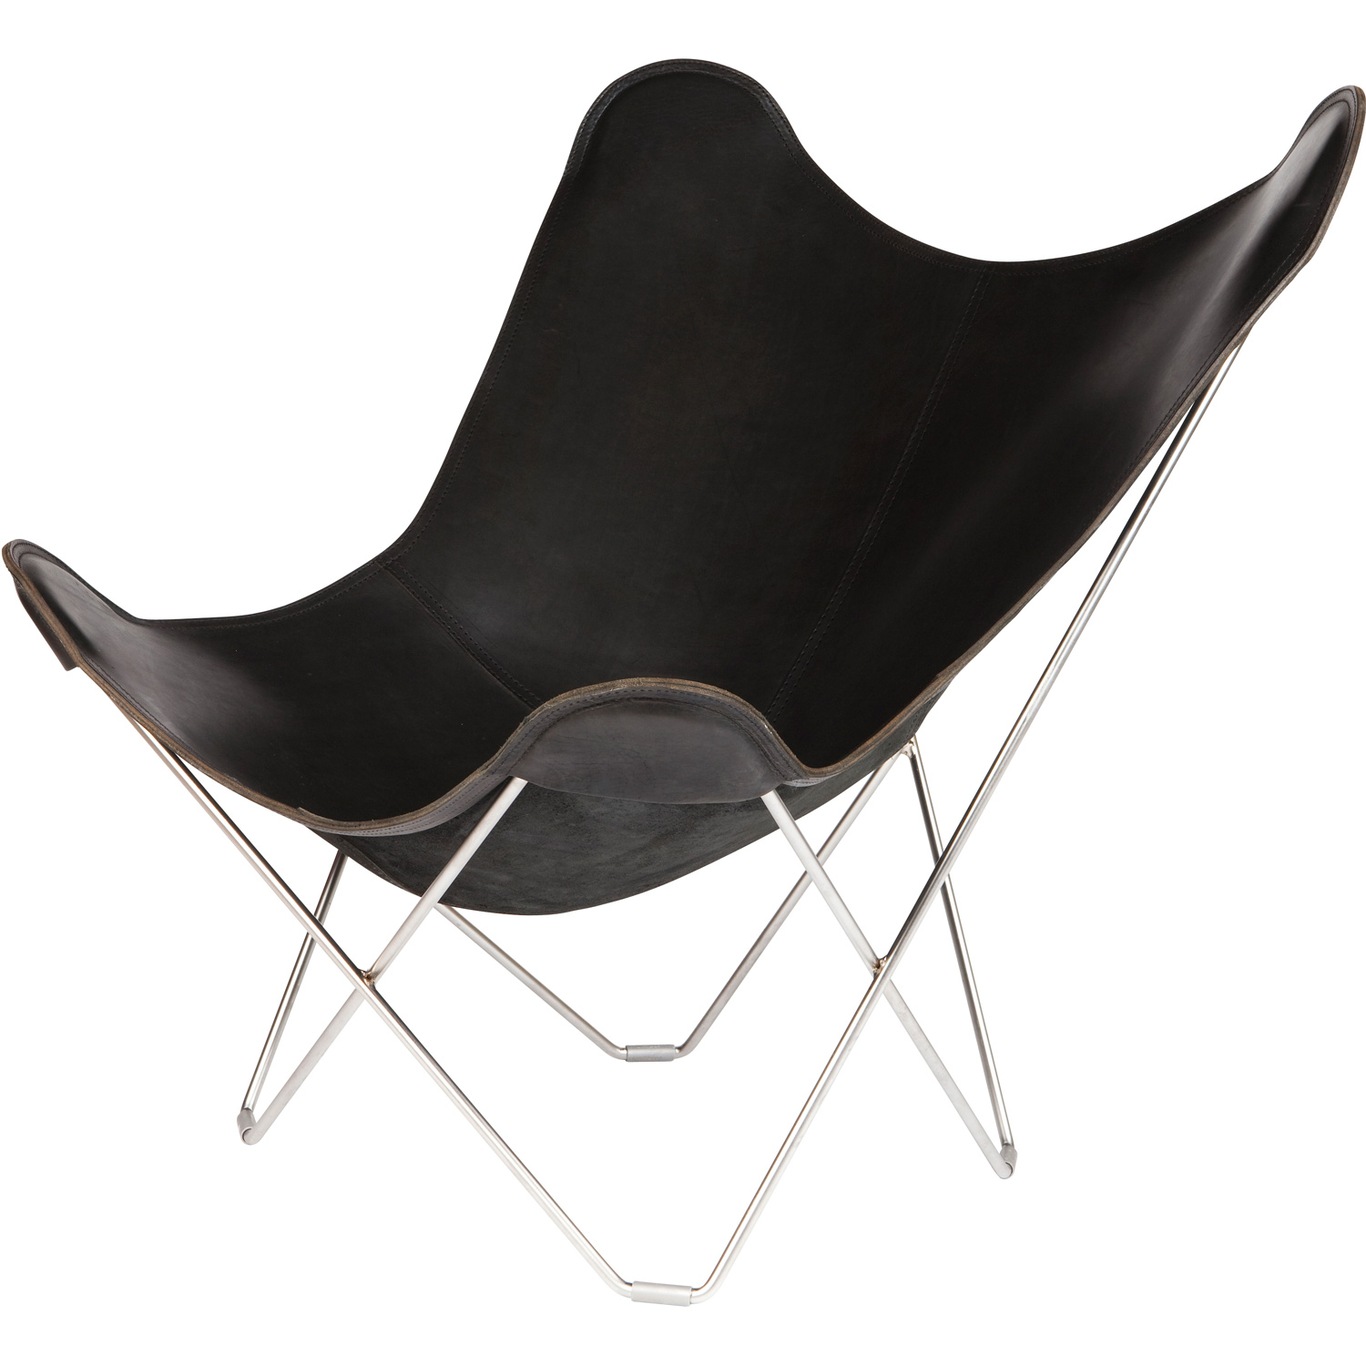 Pampa Mariposa BF Chair, Black/Chrome